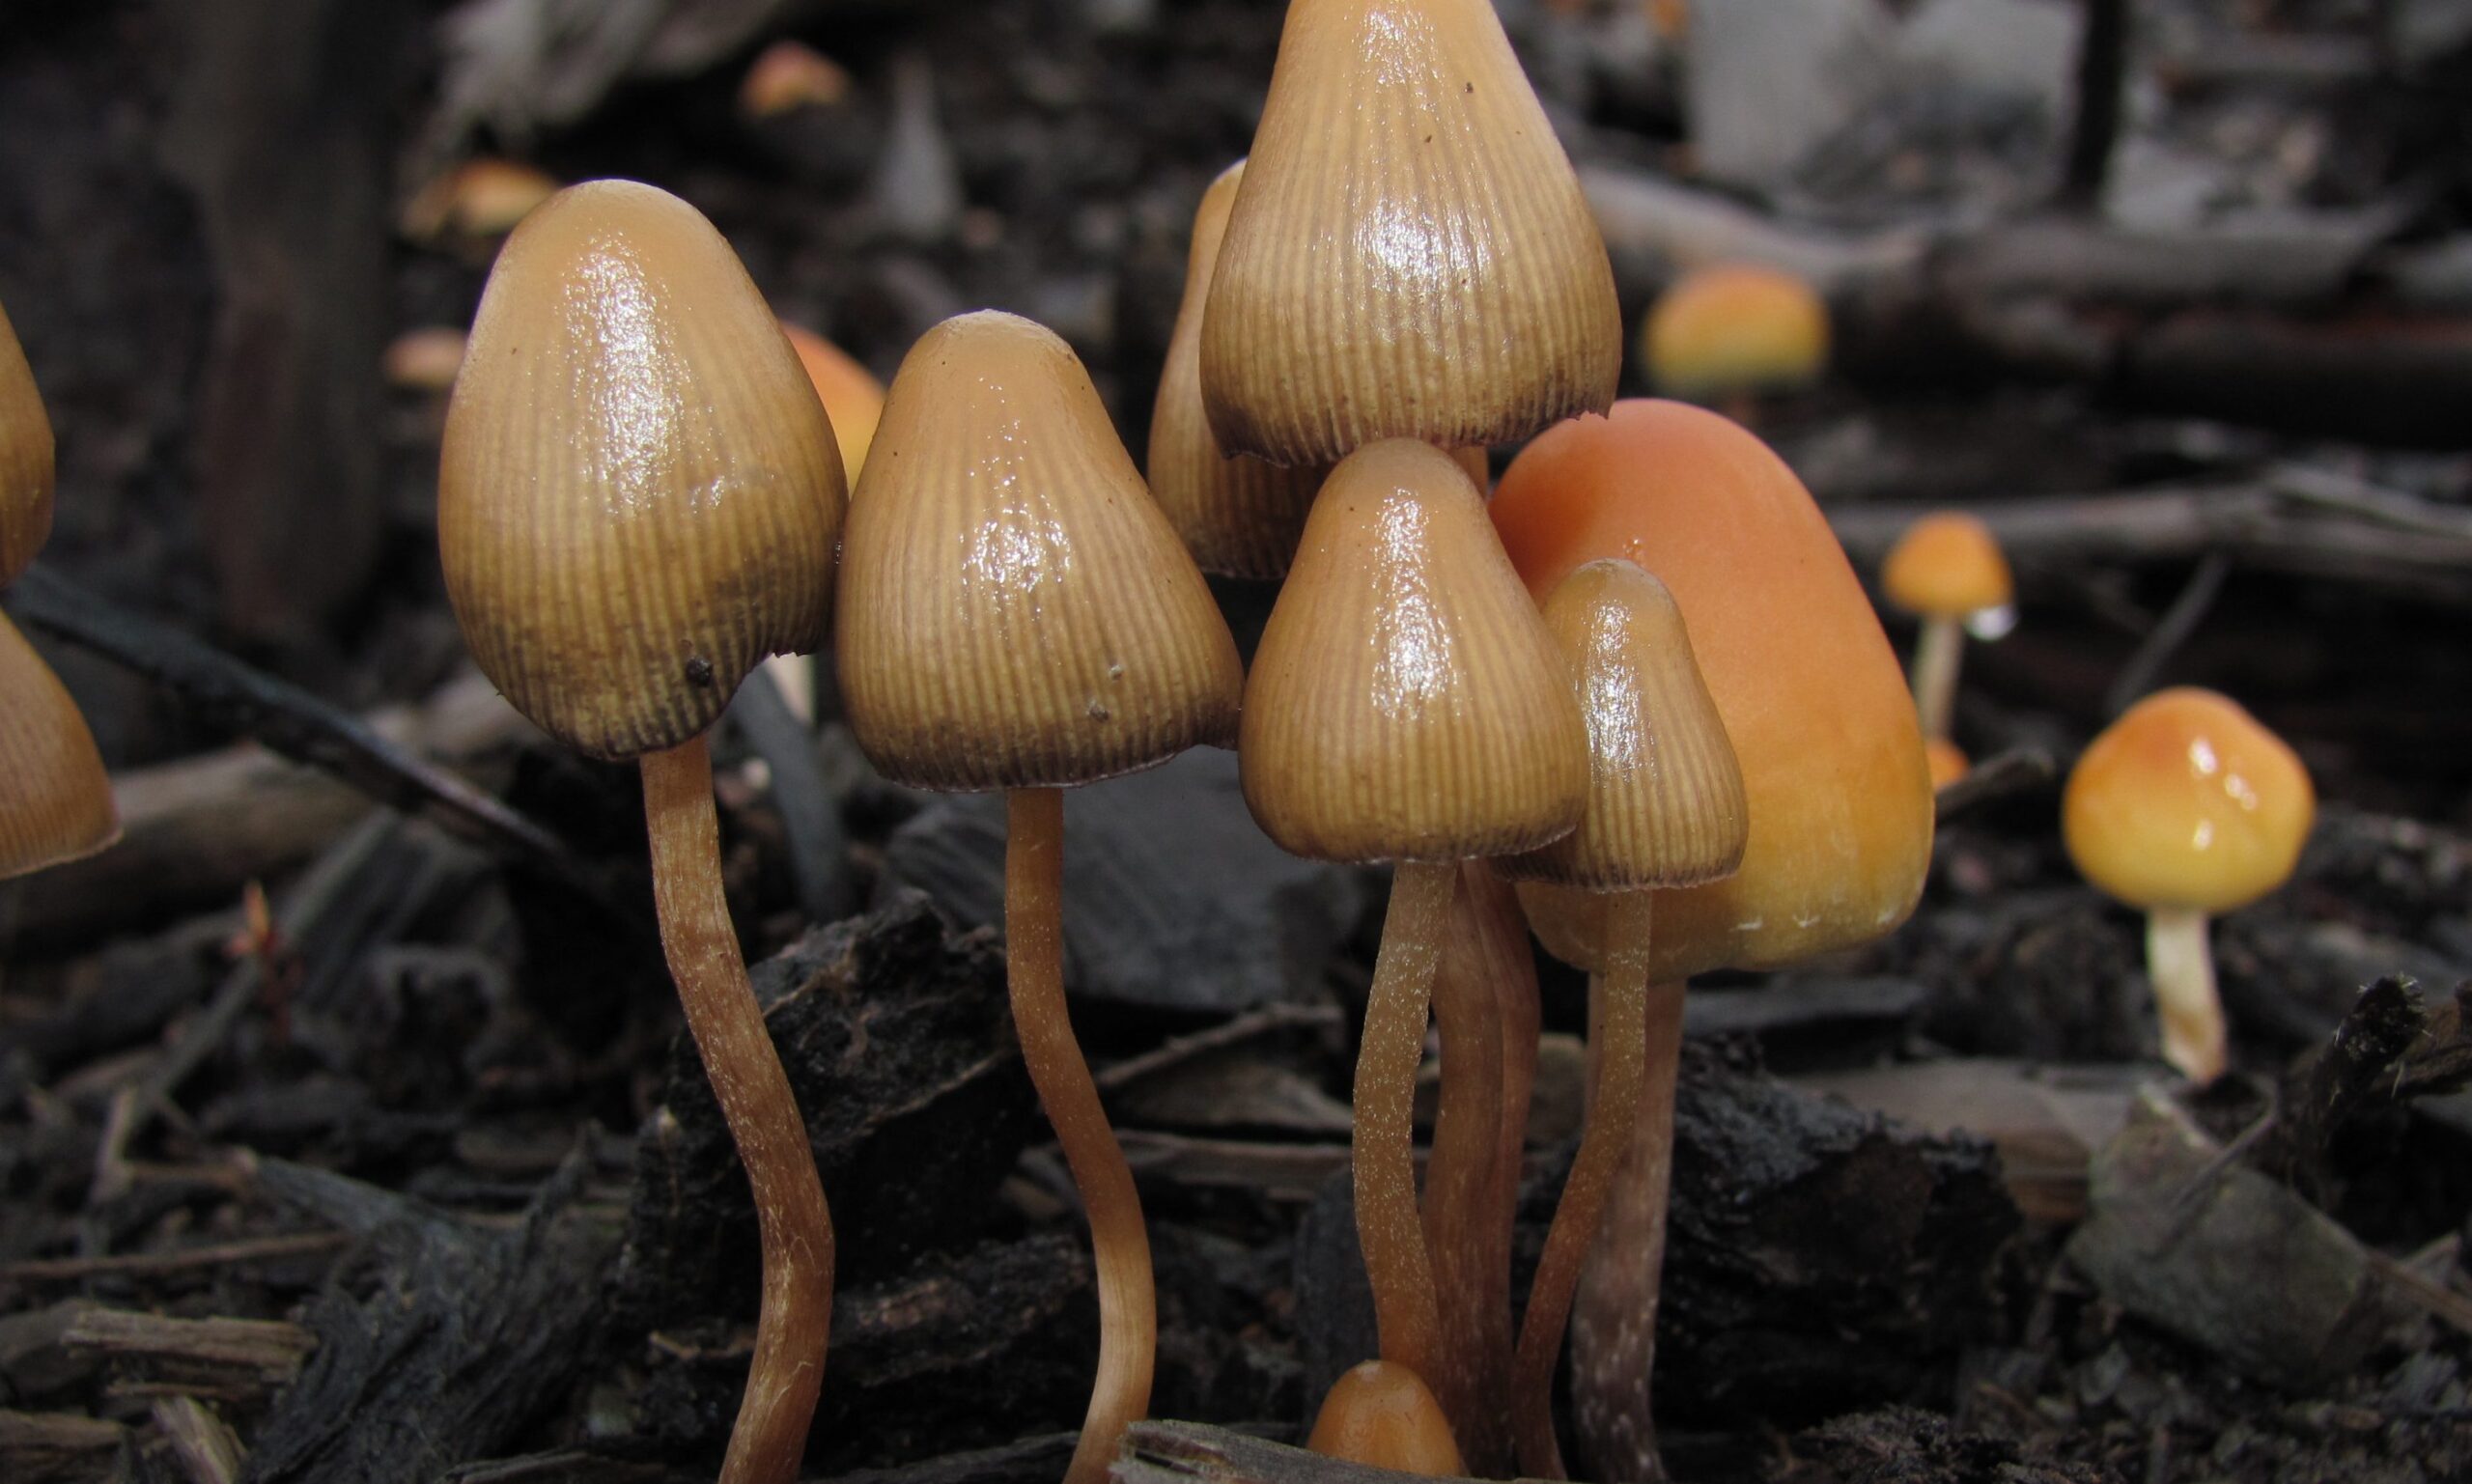 Mpls deprioritizes enforcement of entheogenic plants, mushrooms